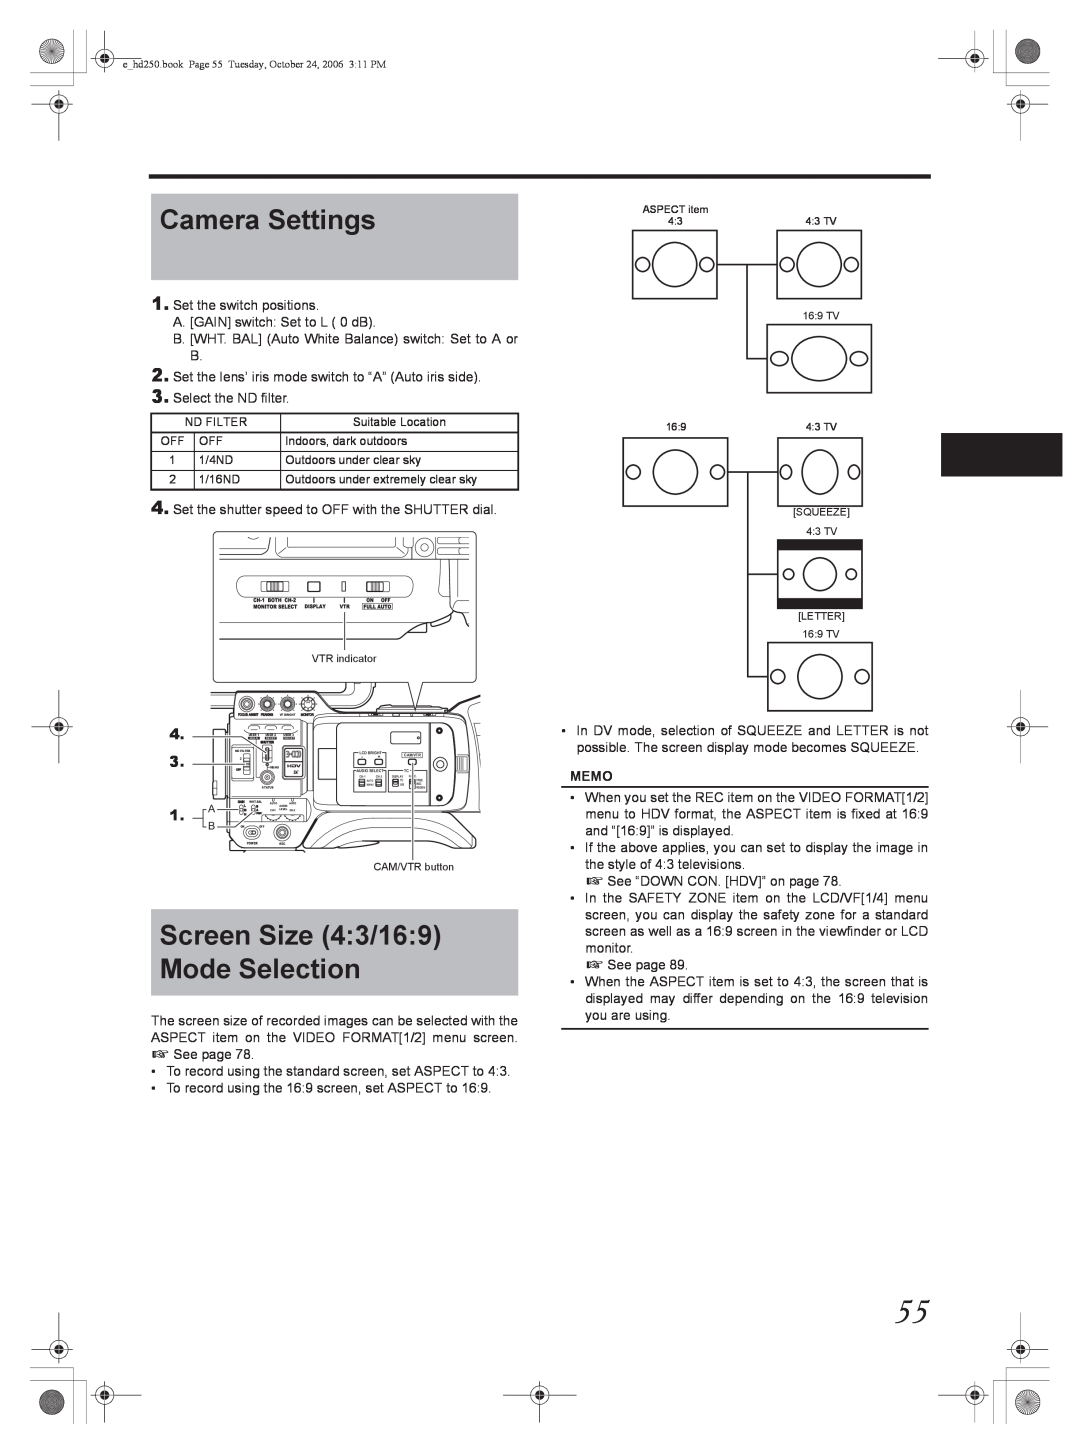 JVC GY-HD251, GY-HD250 manual Camera Settings, Screen Size 43/169 Mode Selection, Memo 